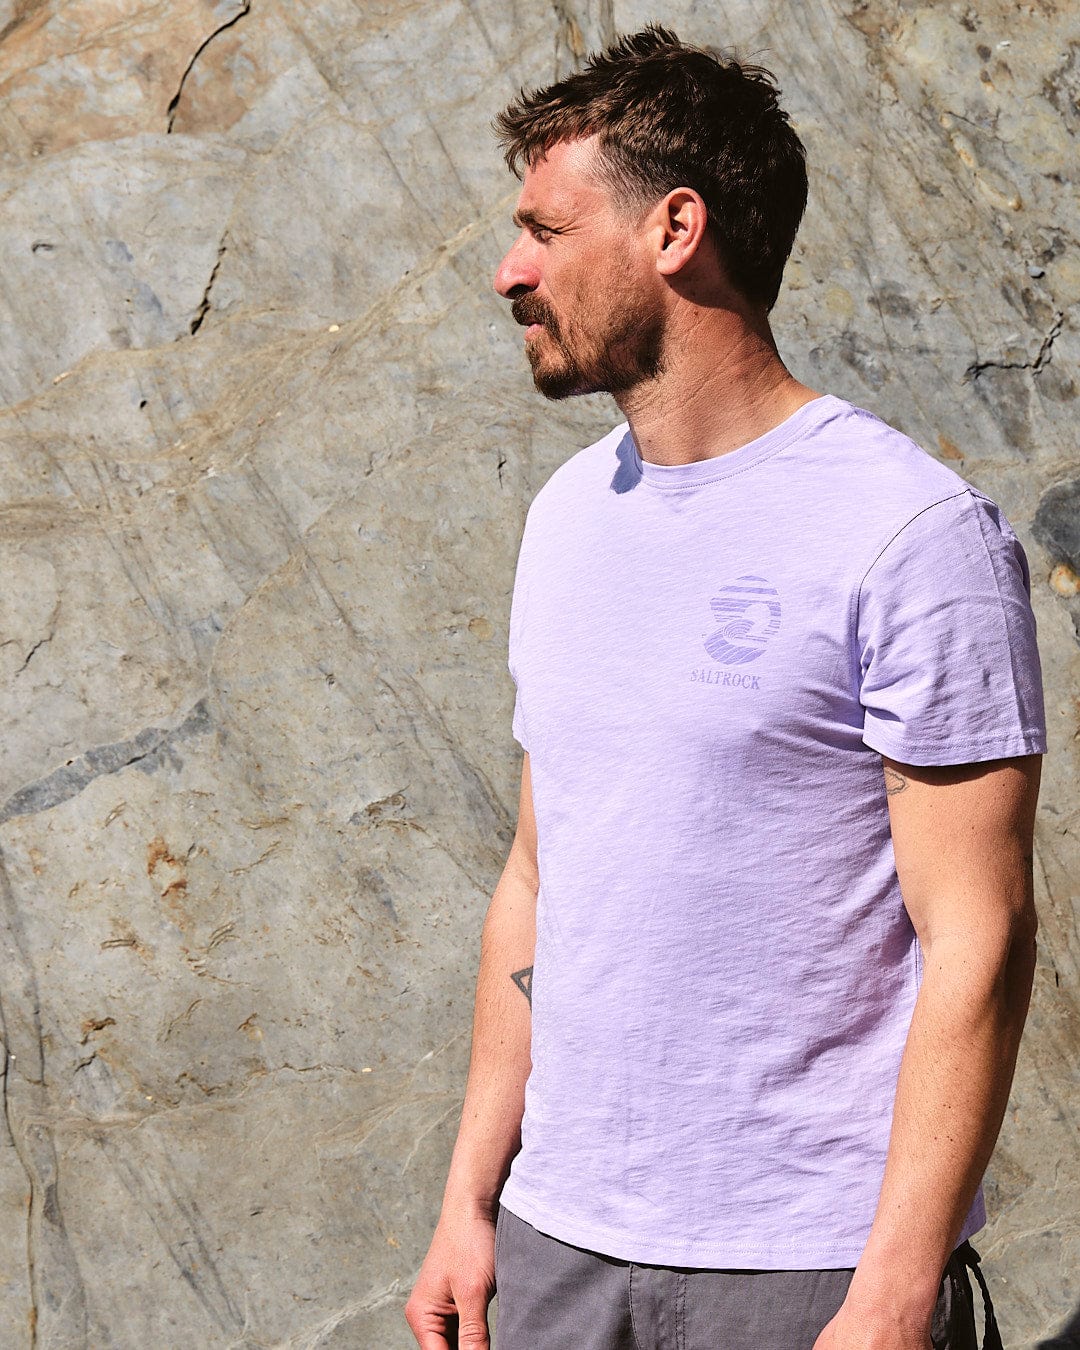 A man wearing an Atlantic - Mens Short Sleeve T-Shirt - Purple by Saltrock, standing next to a rock wall.